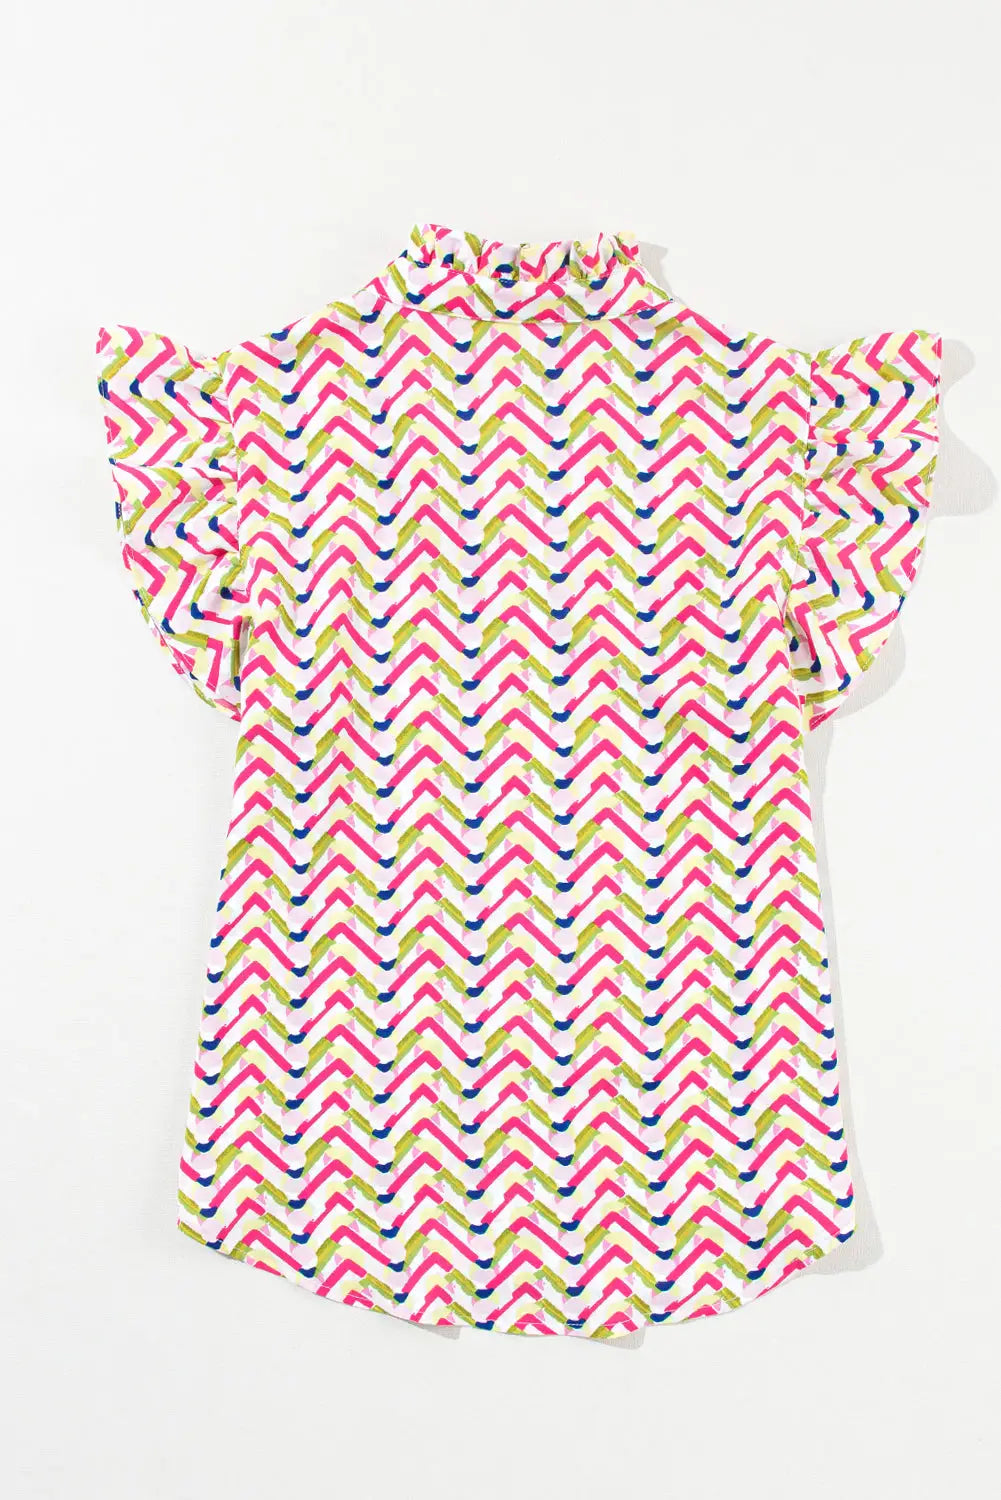 Chevron print ruffled sleeve blouse - tops/blouses & shirts